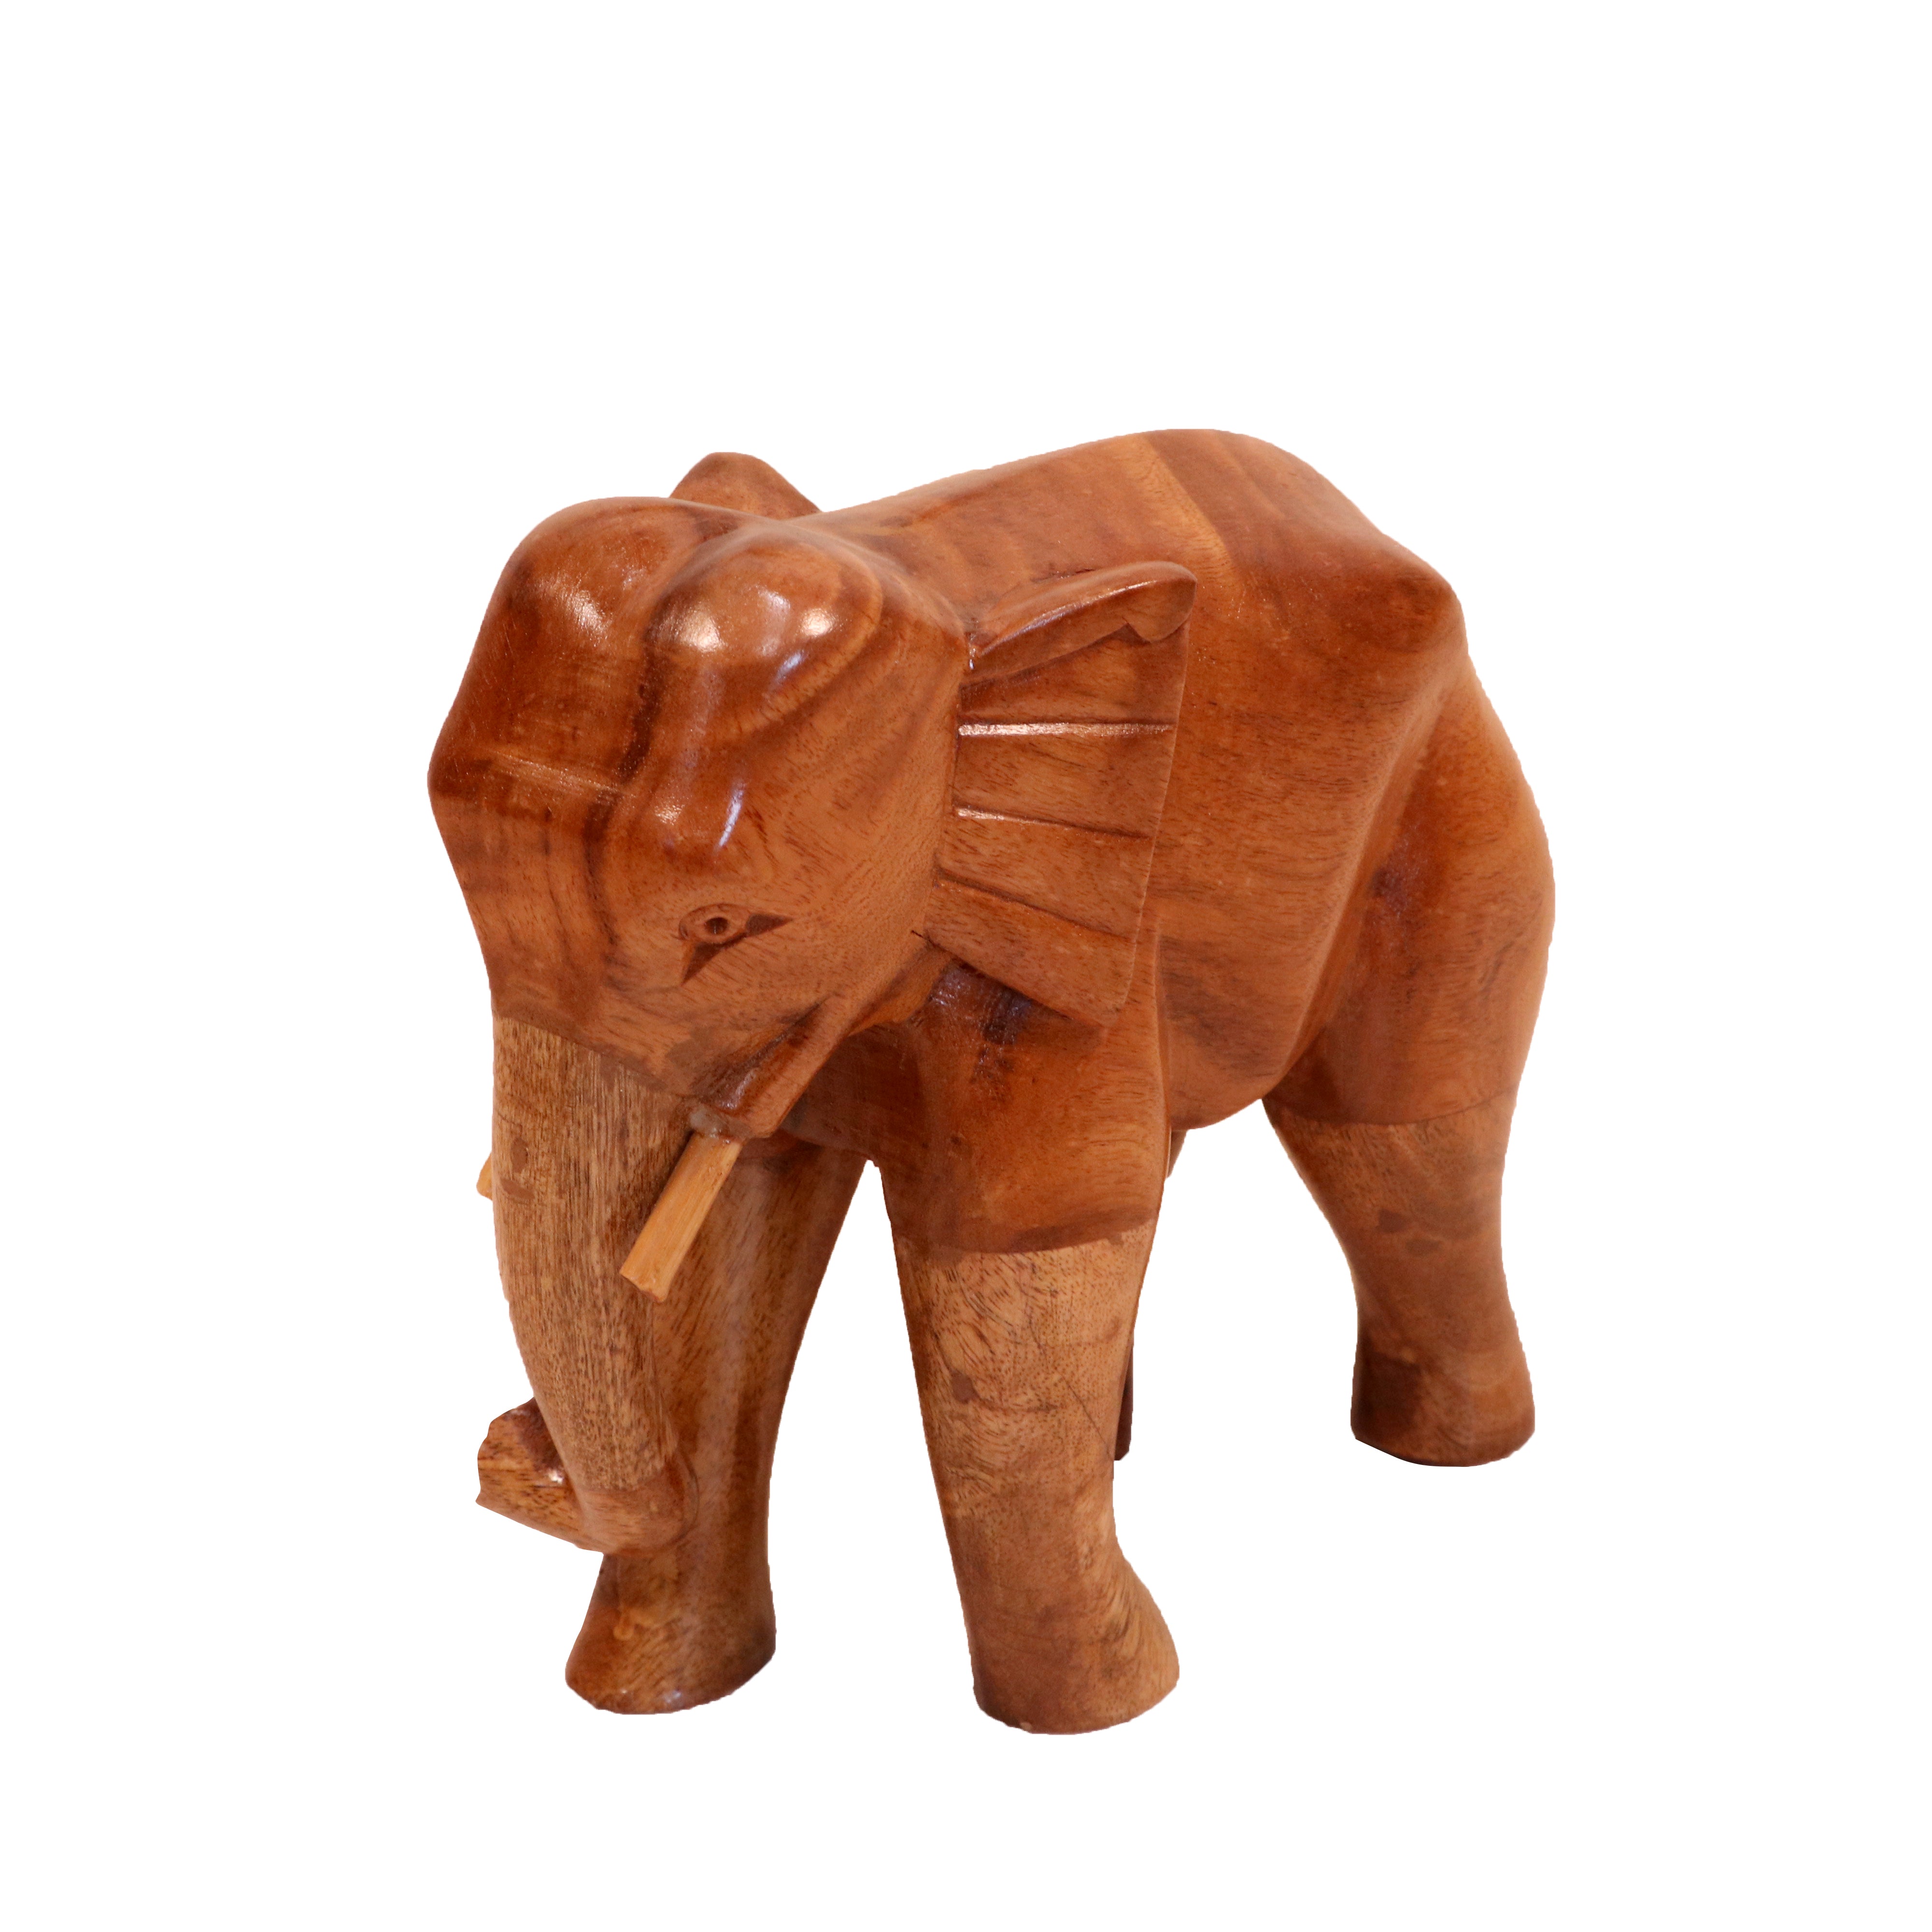 Adorable Elephant with Trunk Handmade Wooden Animal Figurine for Home Animal Figurine